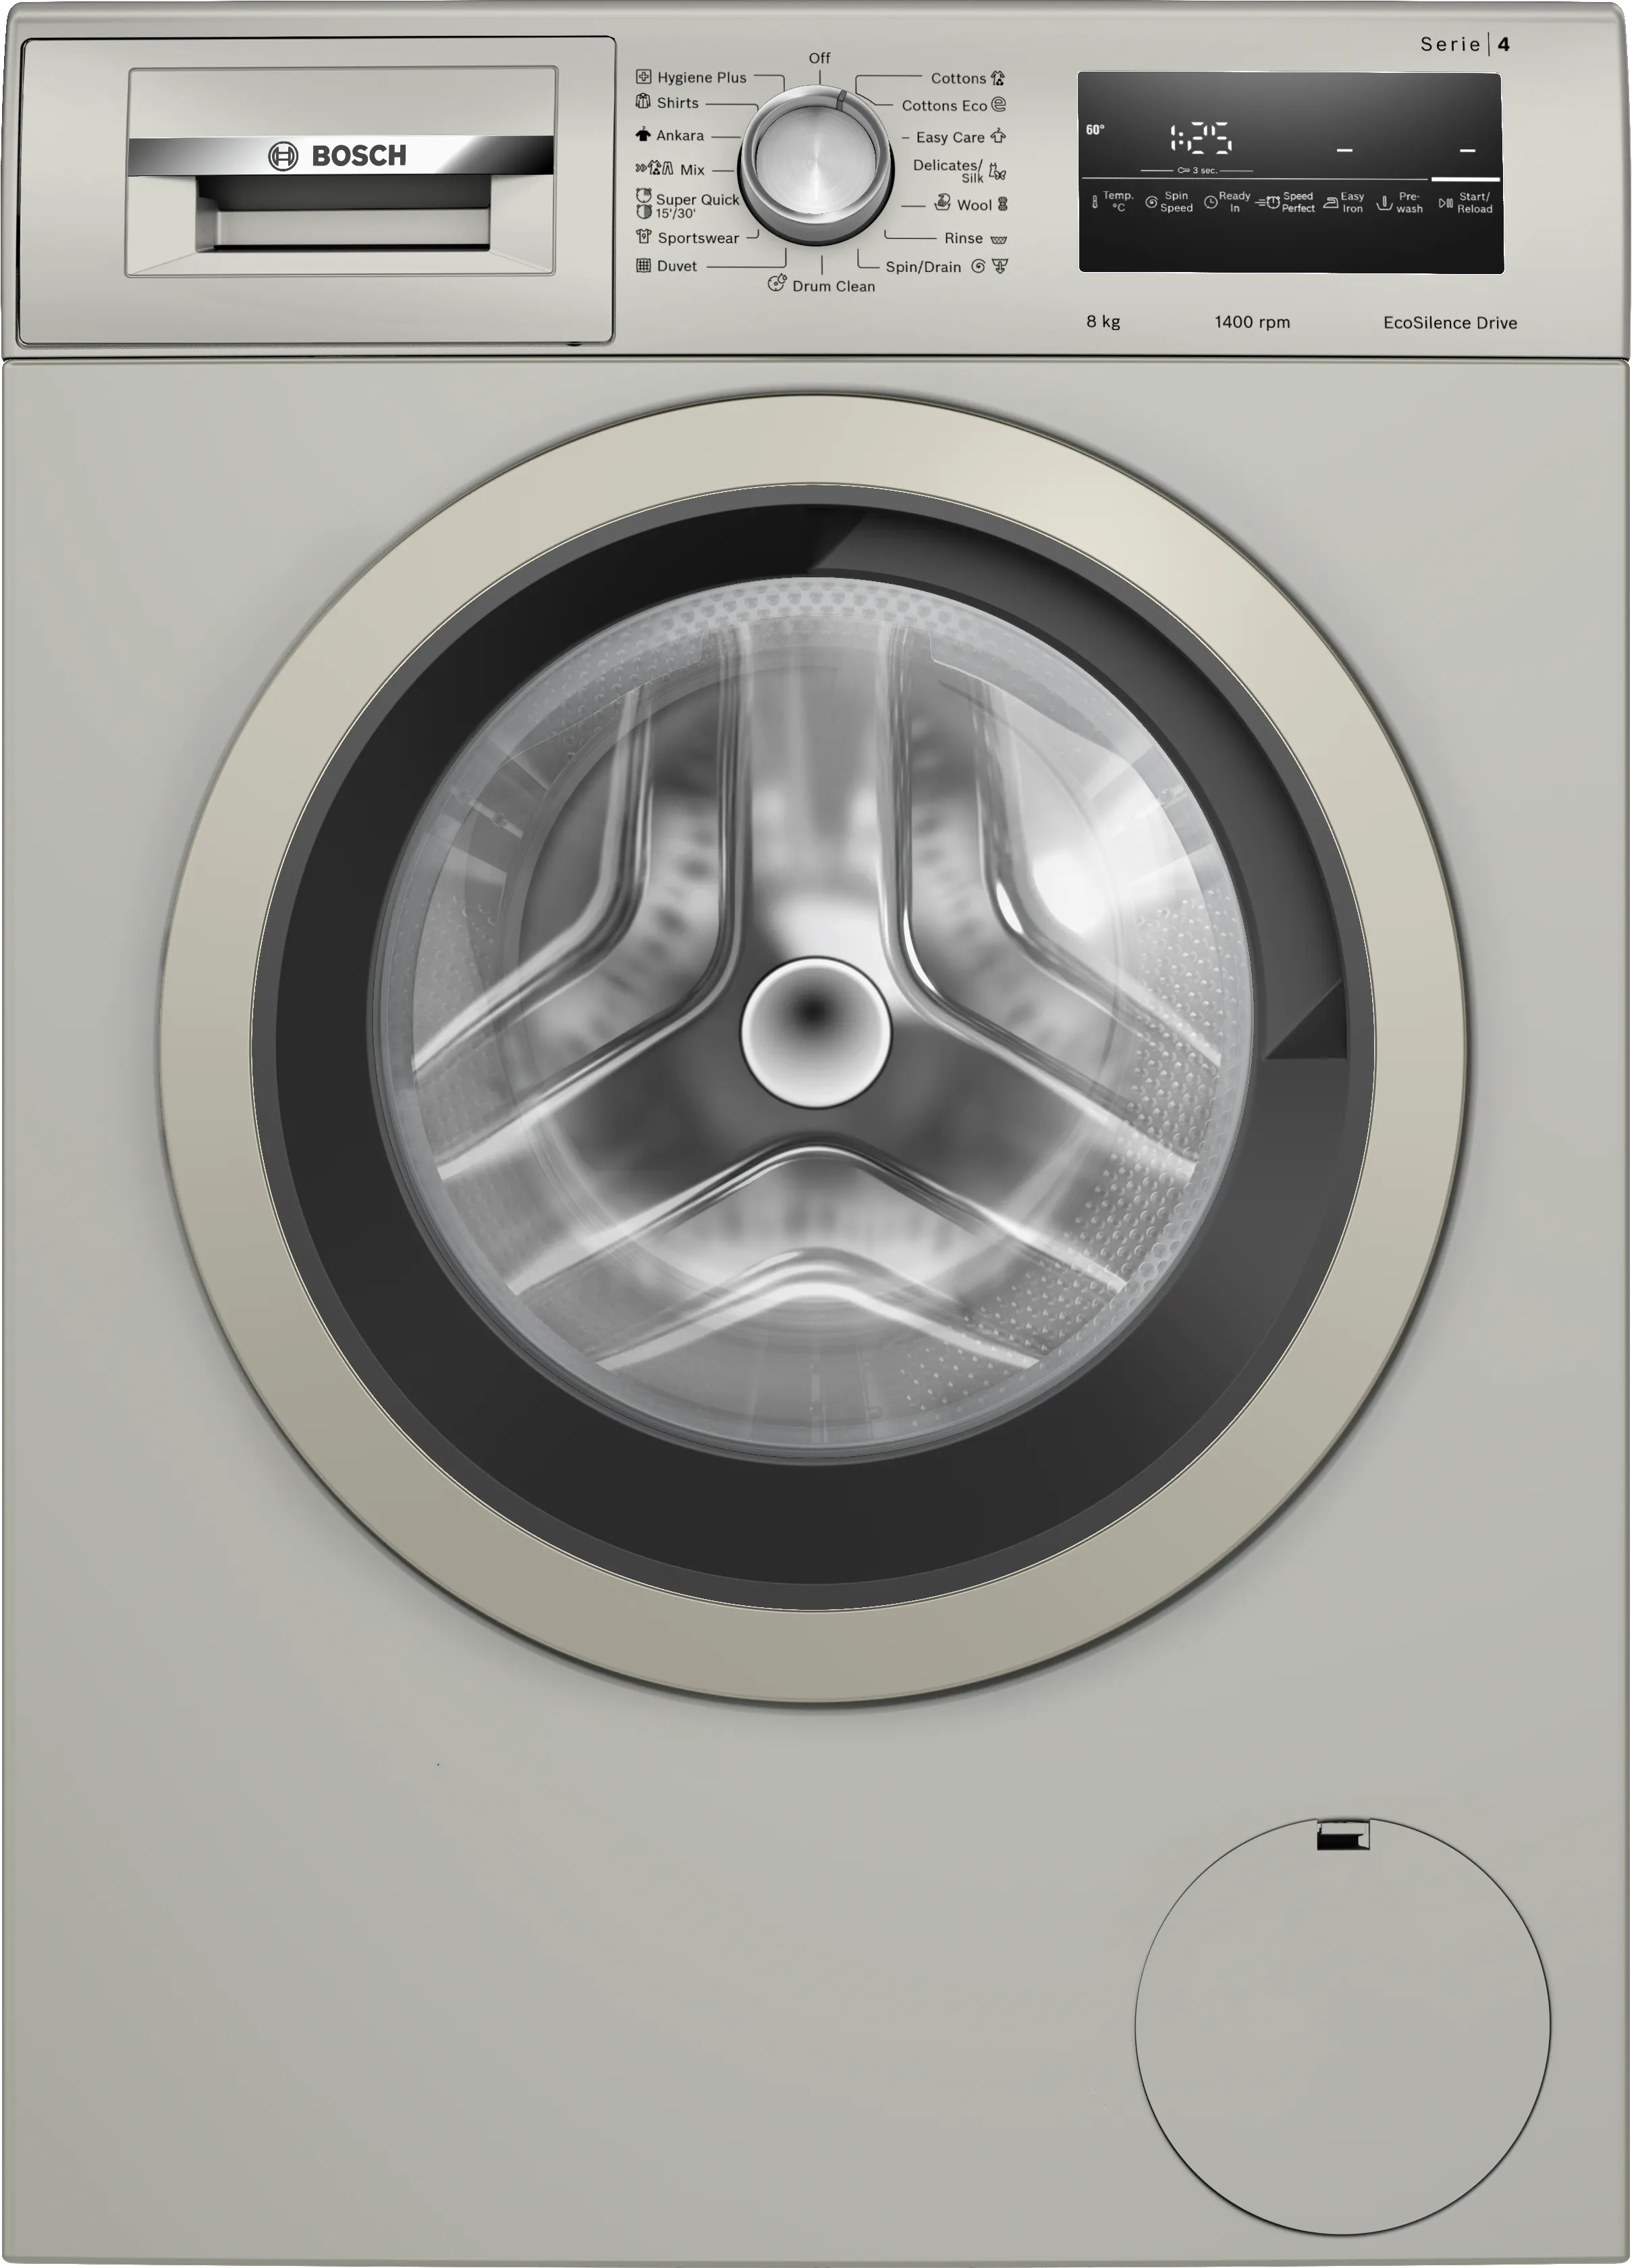 Series 4 washing machine, frontloader fullsize 8 kg , Silver inox 